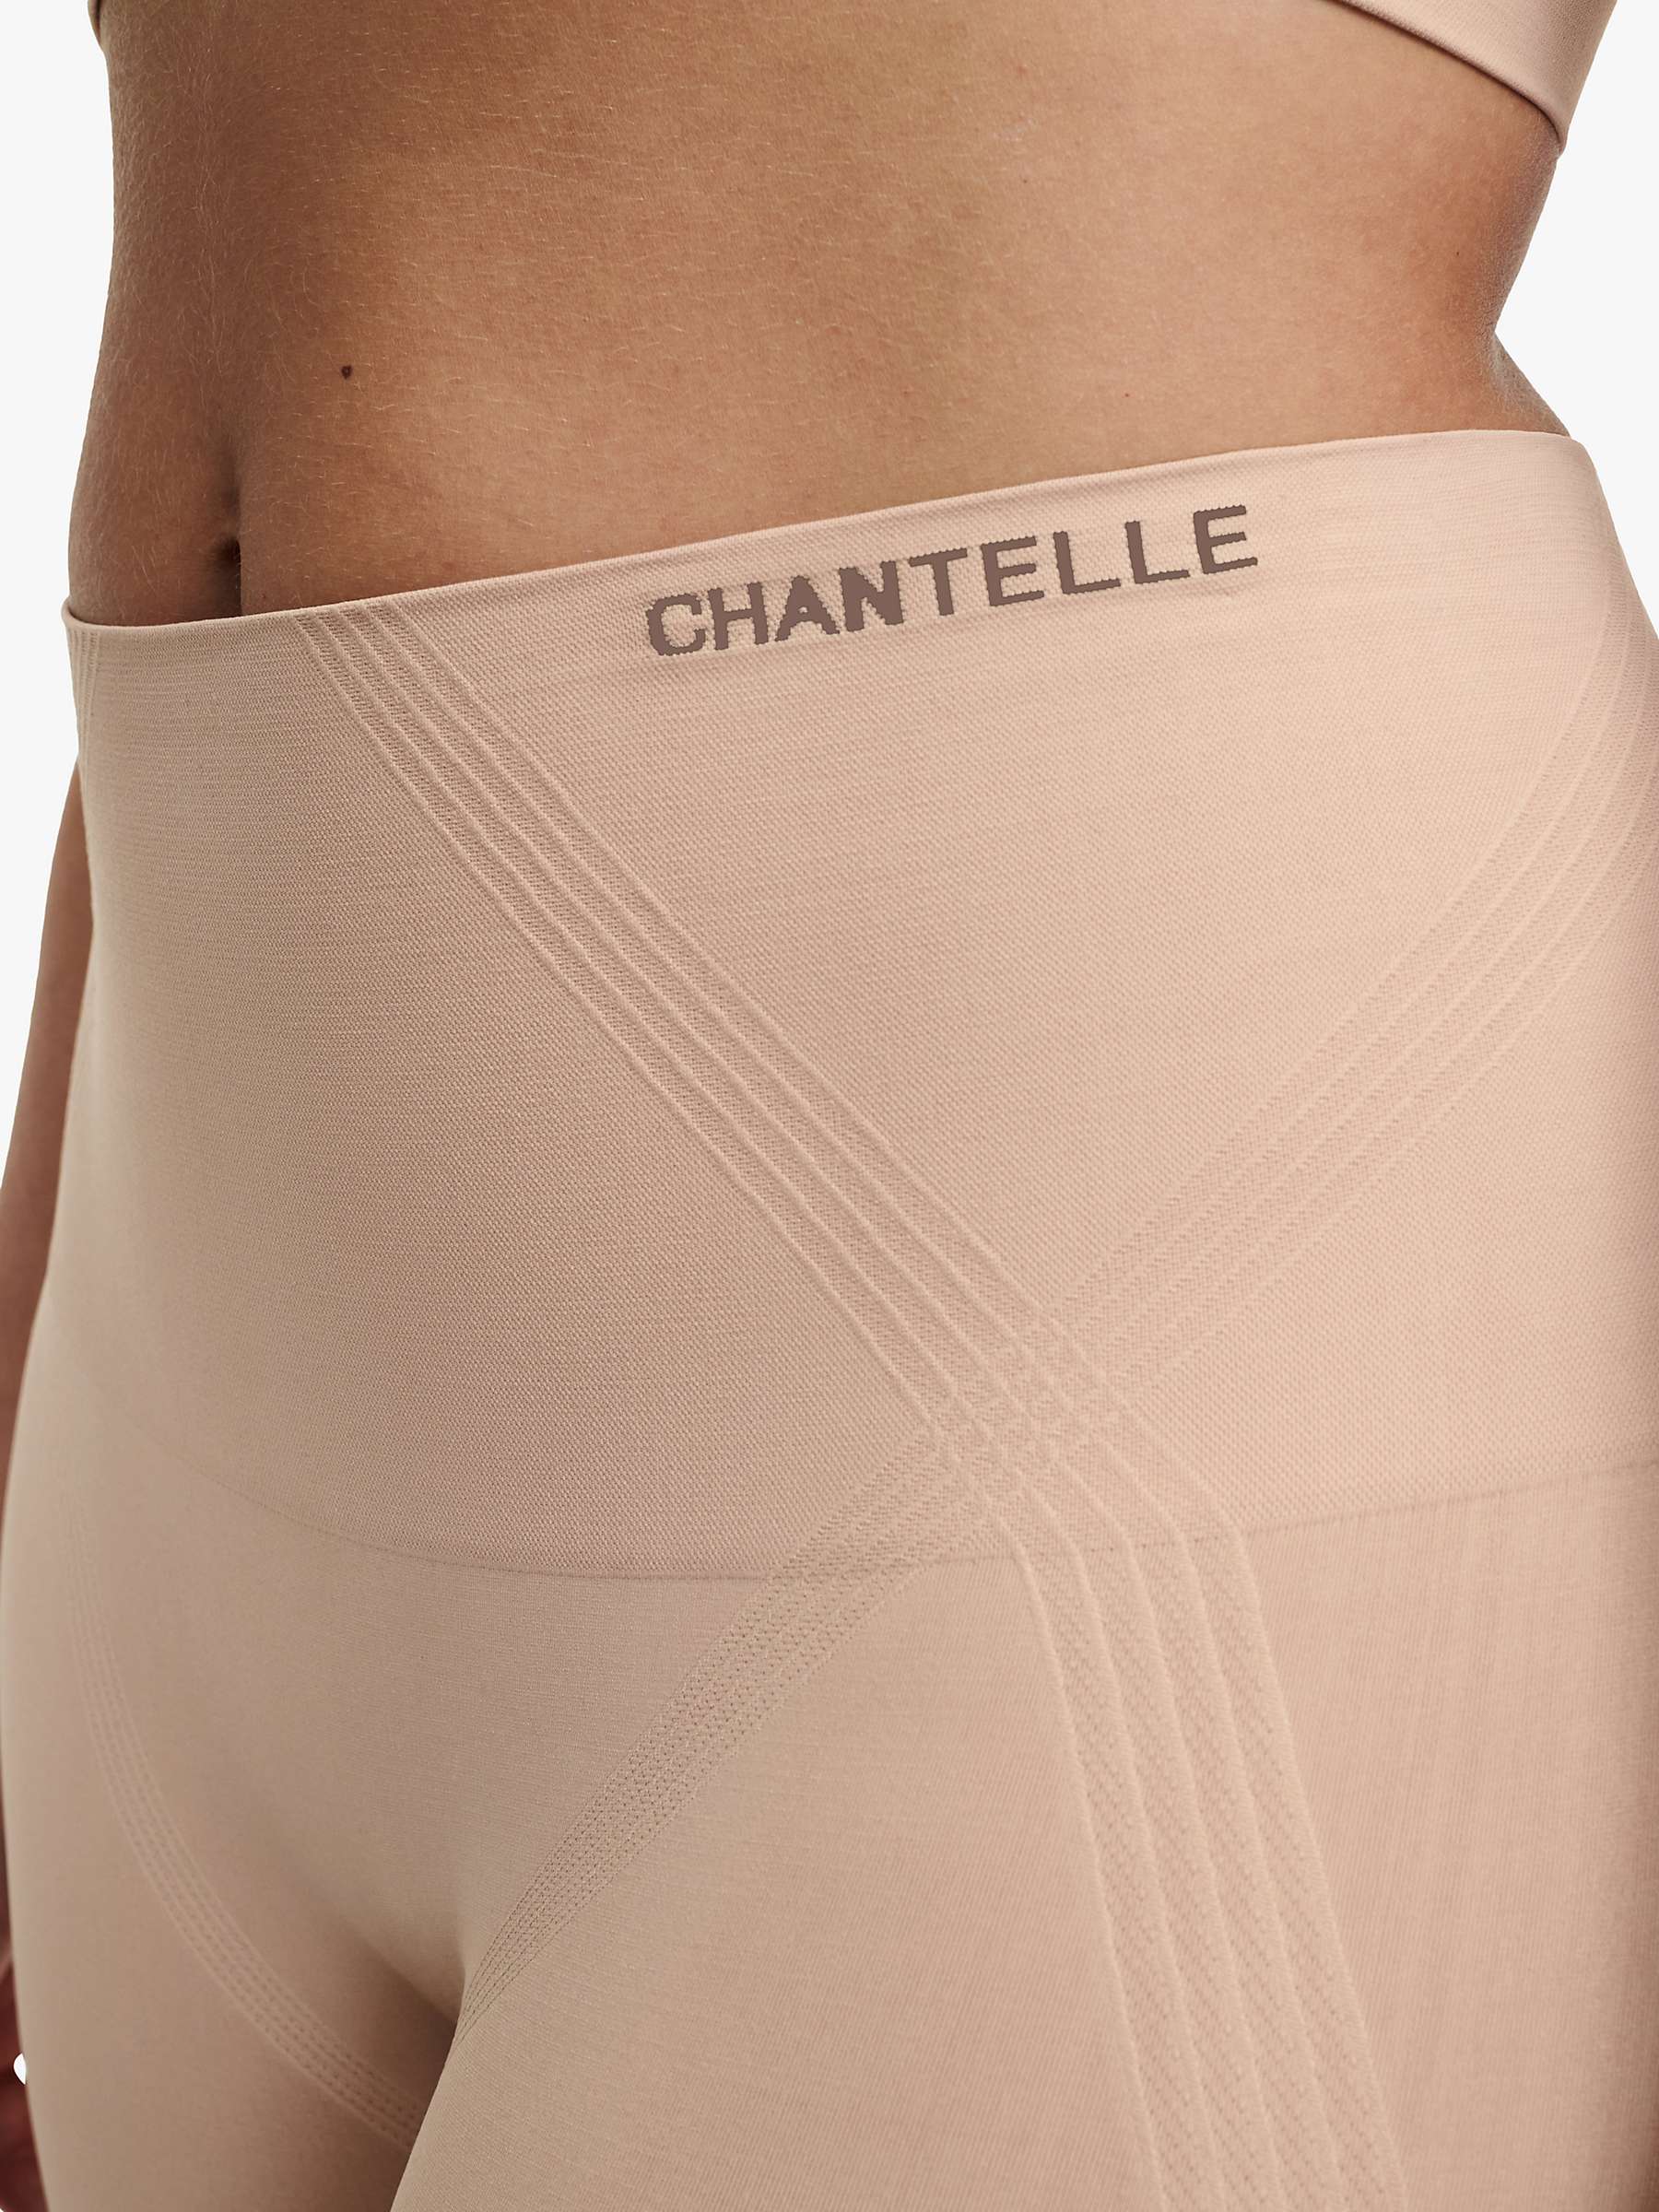 Buy Chantelle Smooth Comfort Light Shaping High Waist Long Shorts Online at johnlewis.com